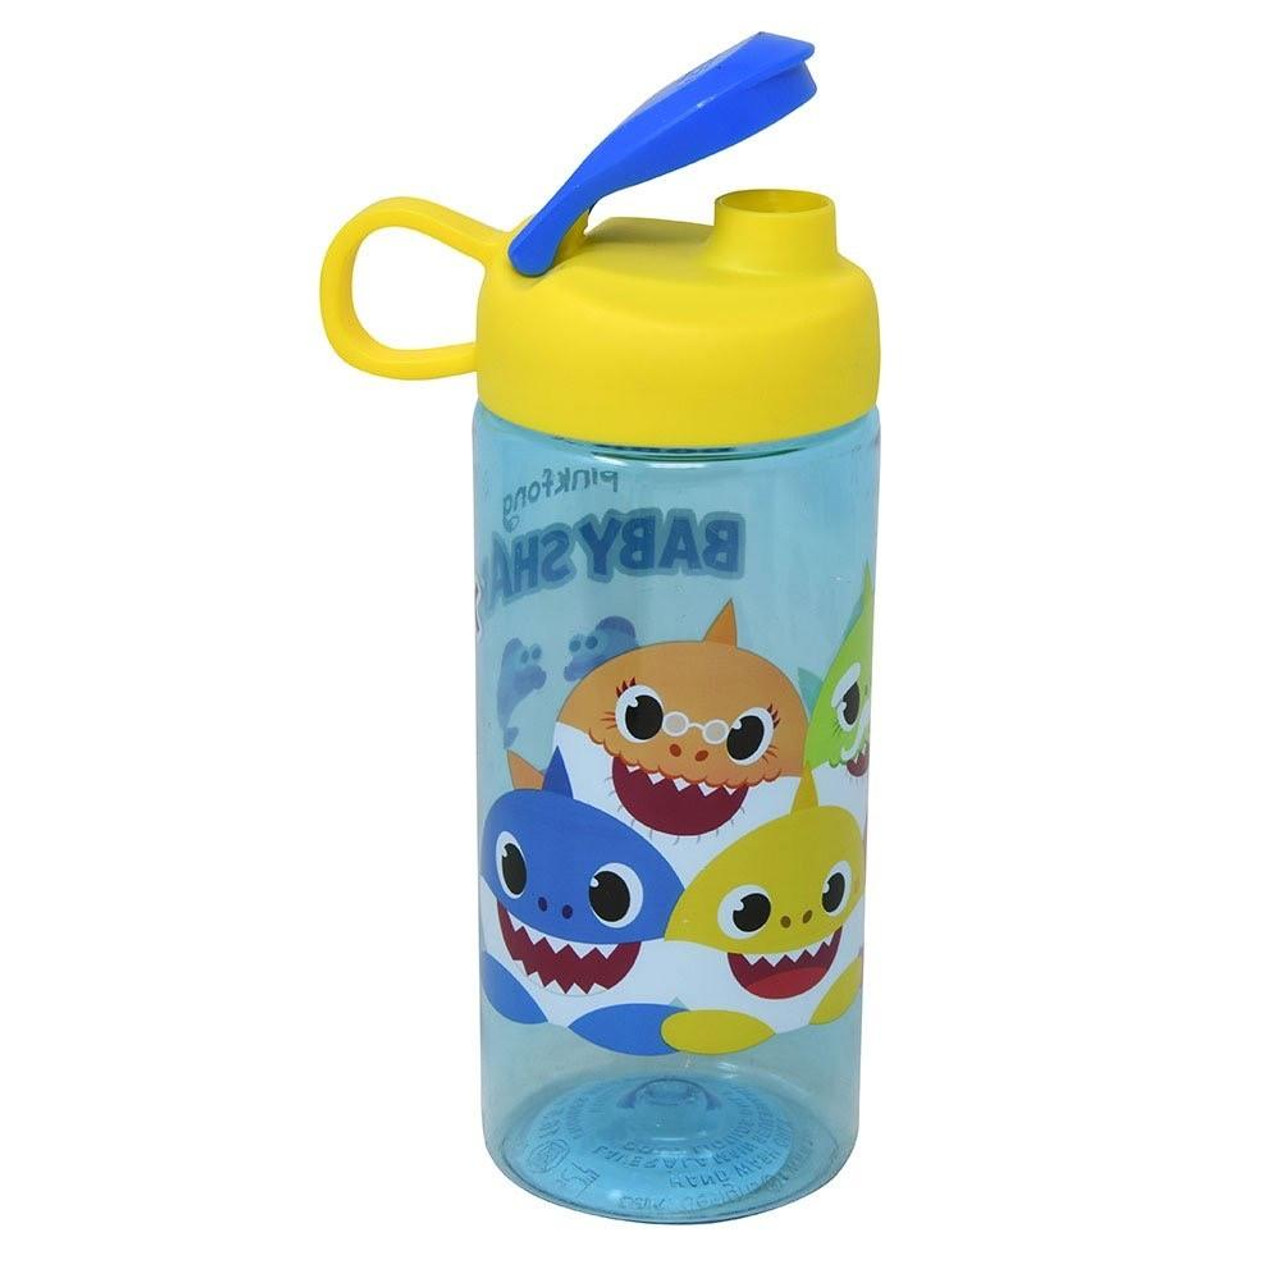 Baby Shark 16.5 oz. Kids BPA Free Water Bottle.